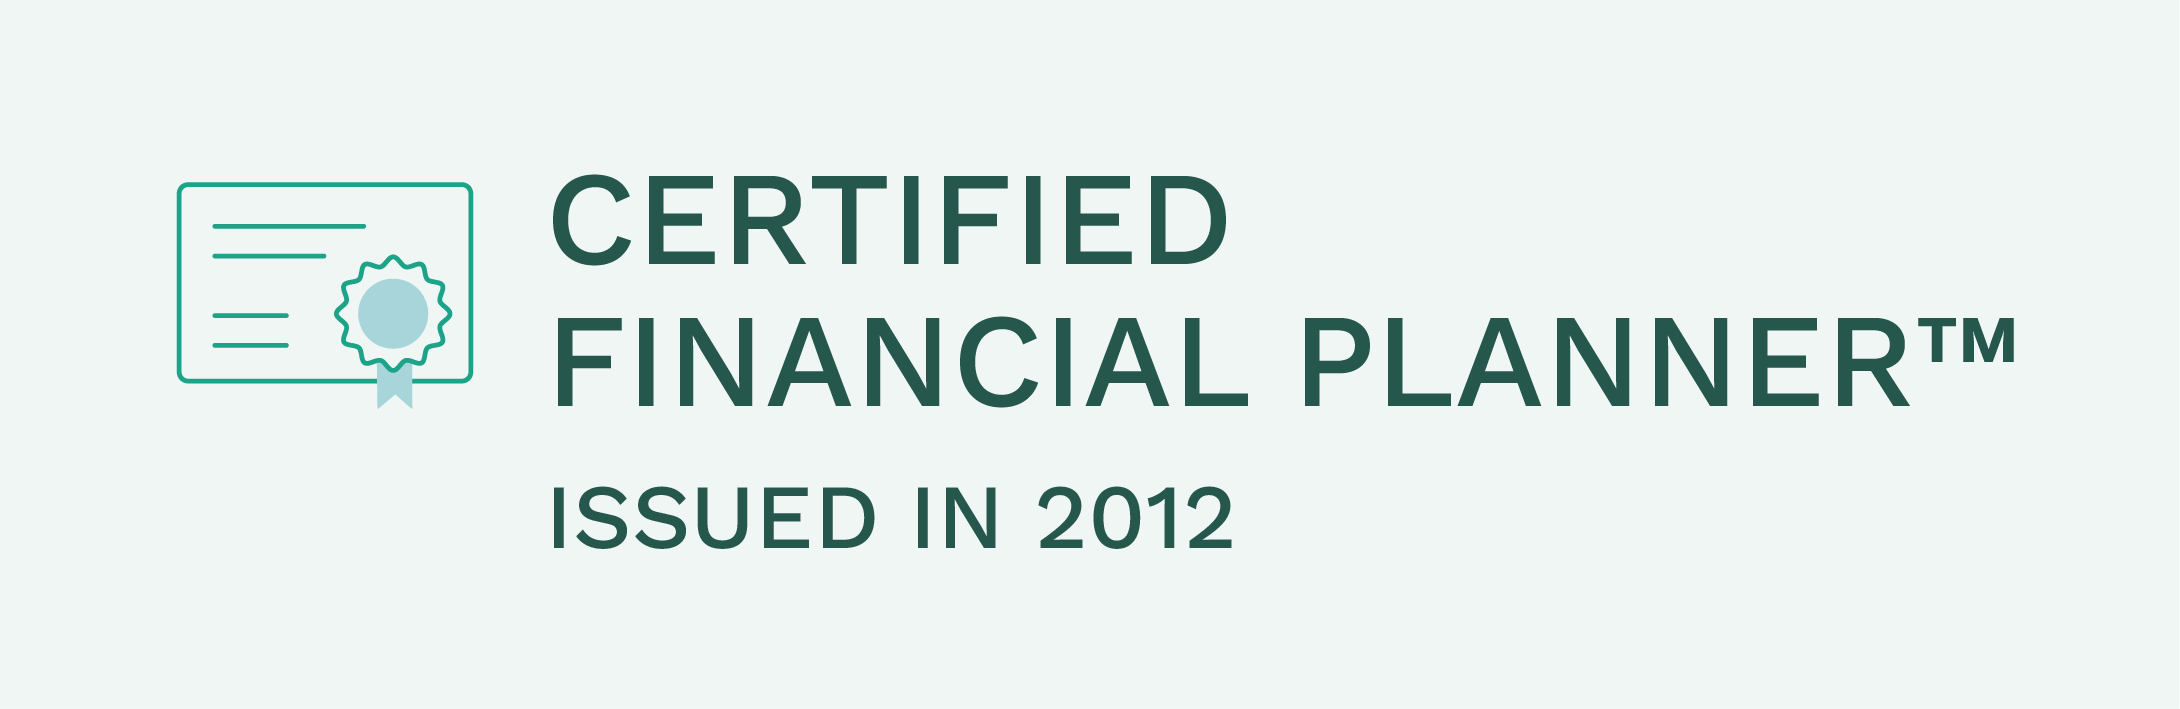 Certified Financial Planner 2012